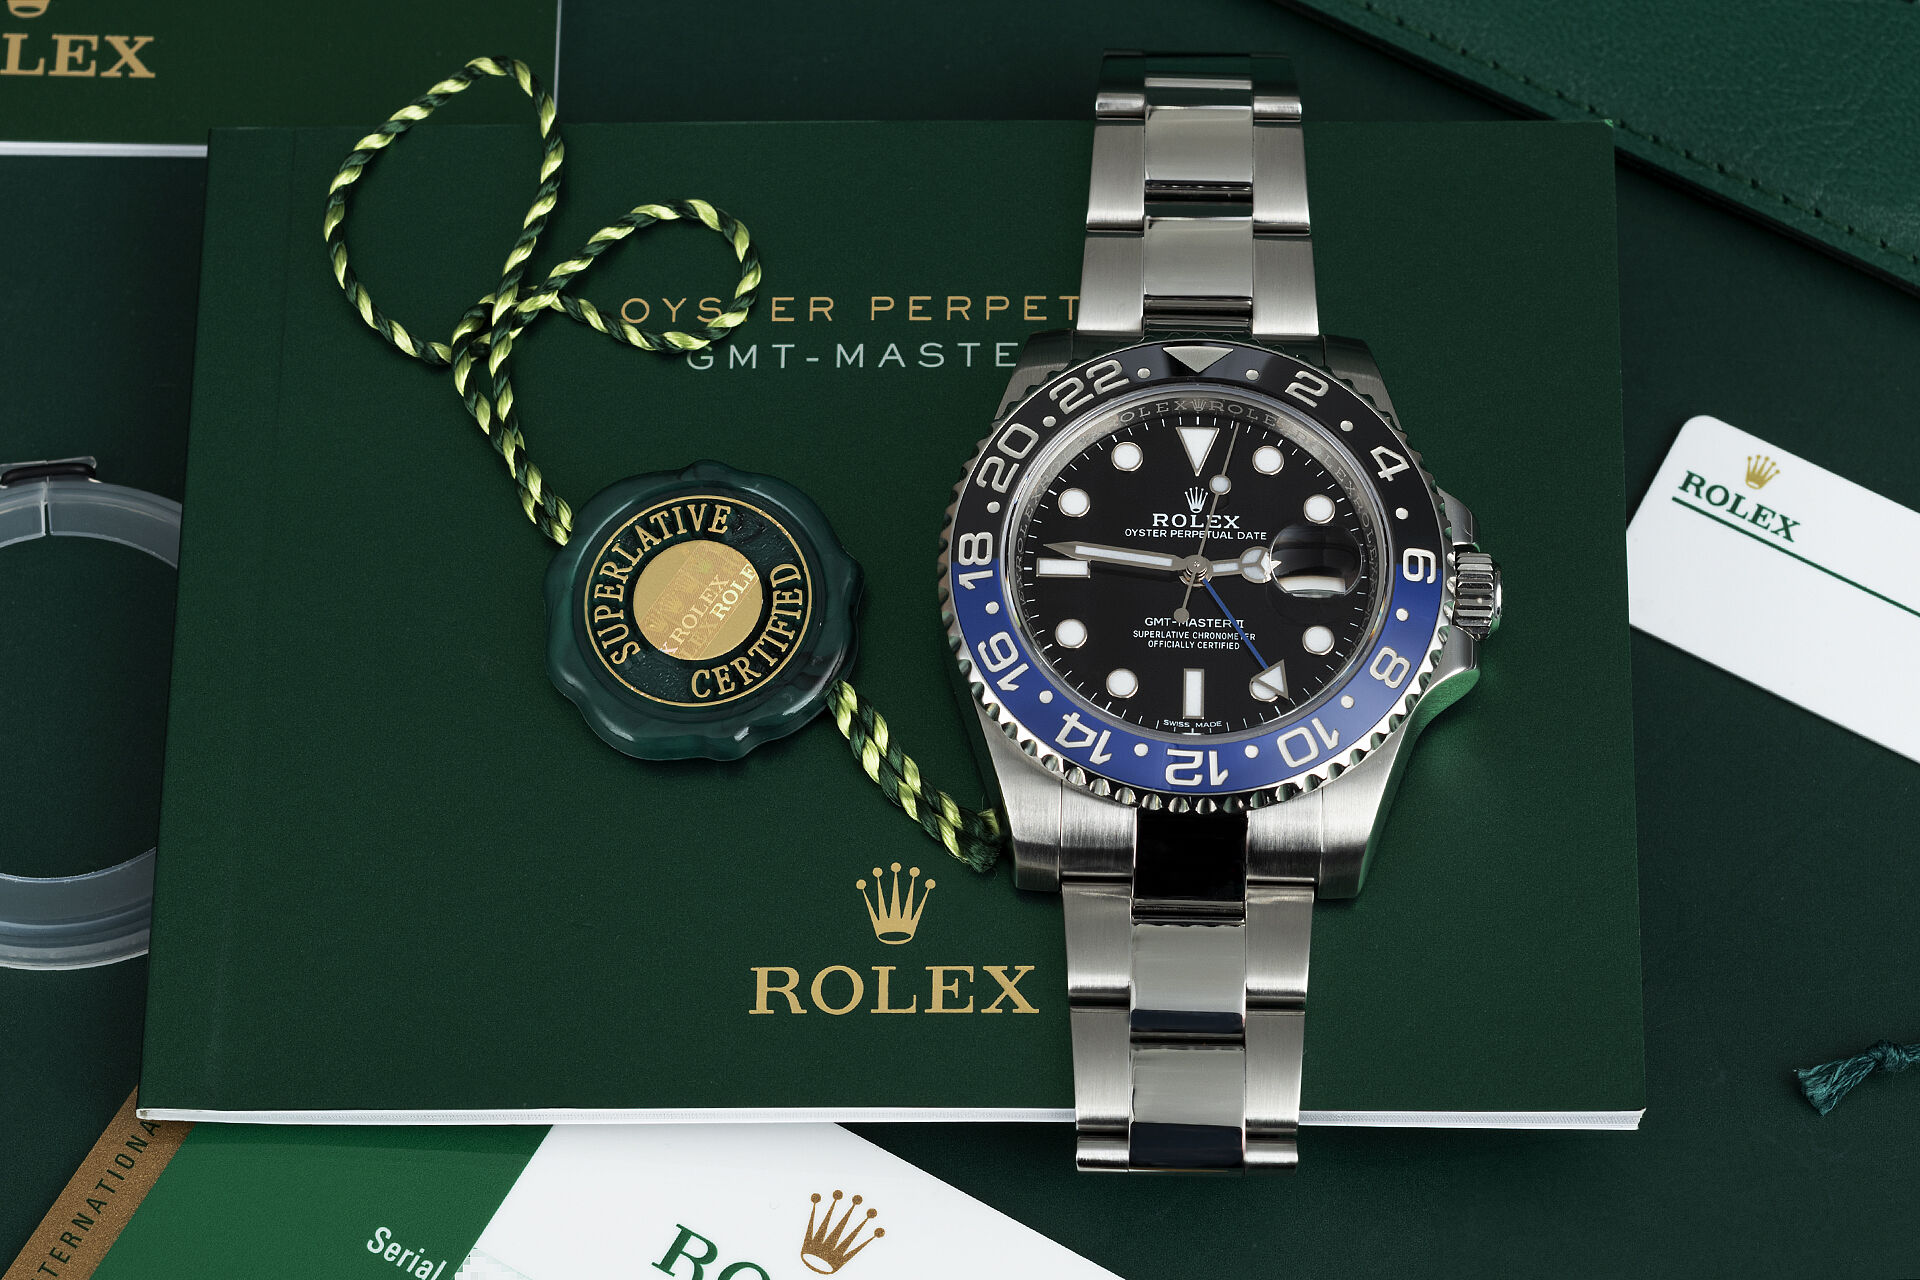 ref 116710BLNR | 1st Gen - Box & Certificate | Rolex GMT-Master II